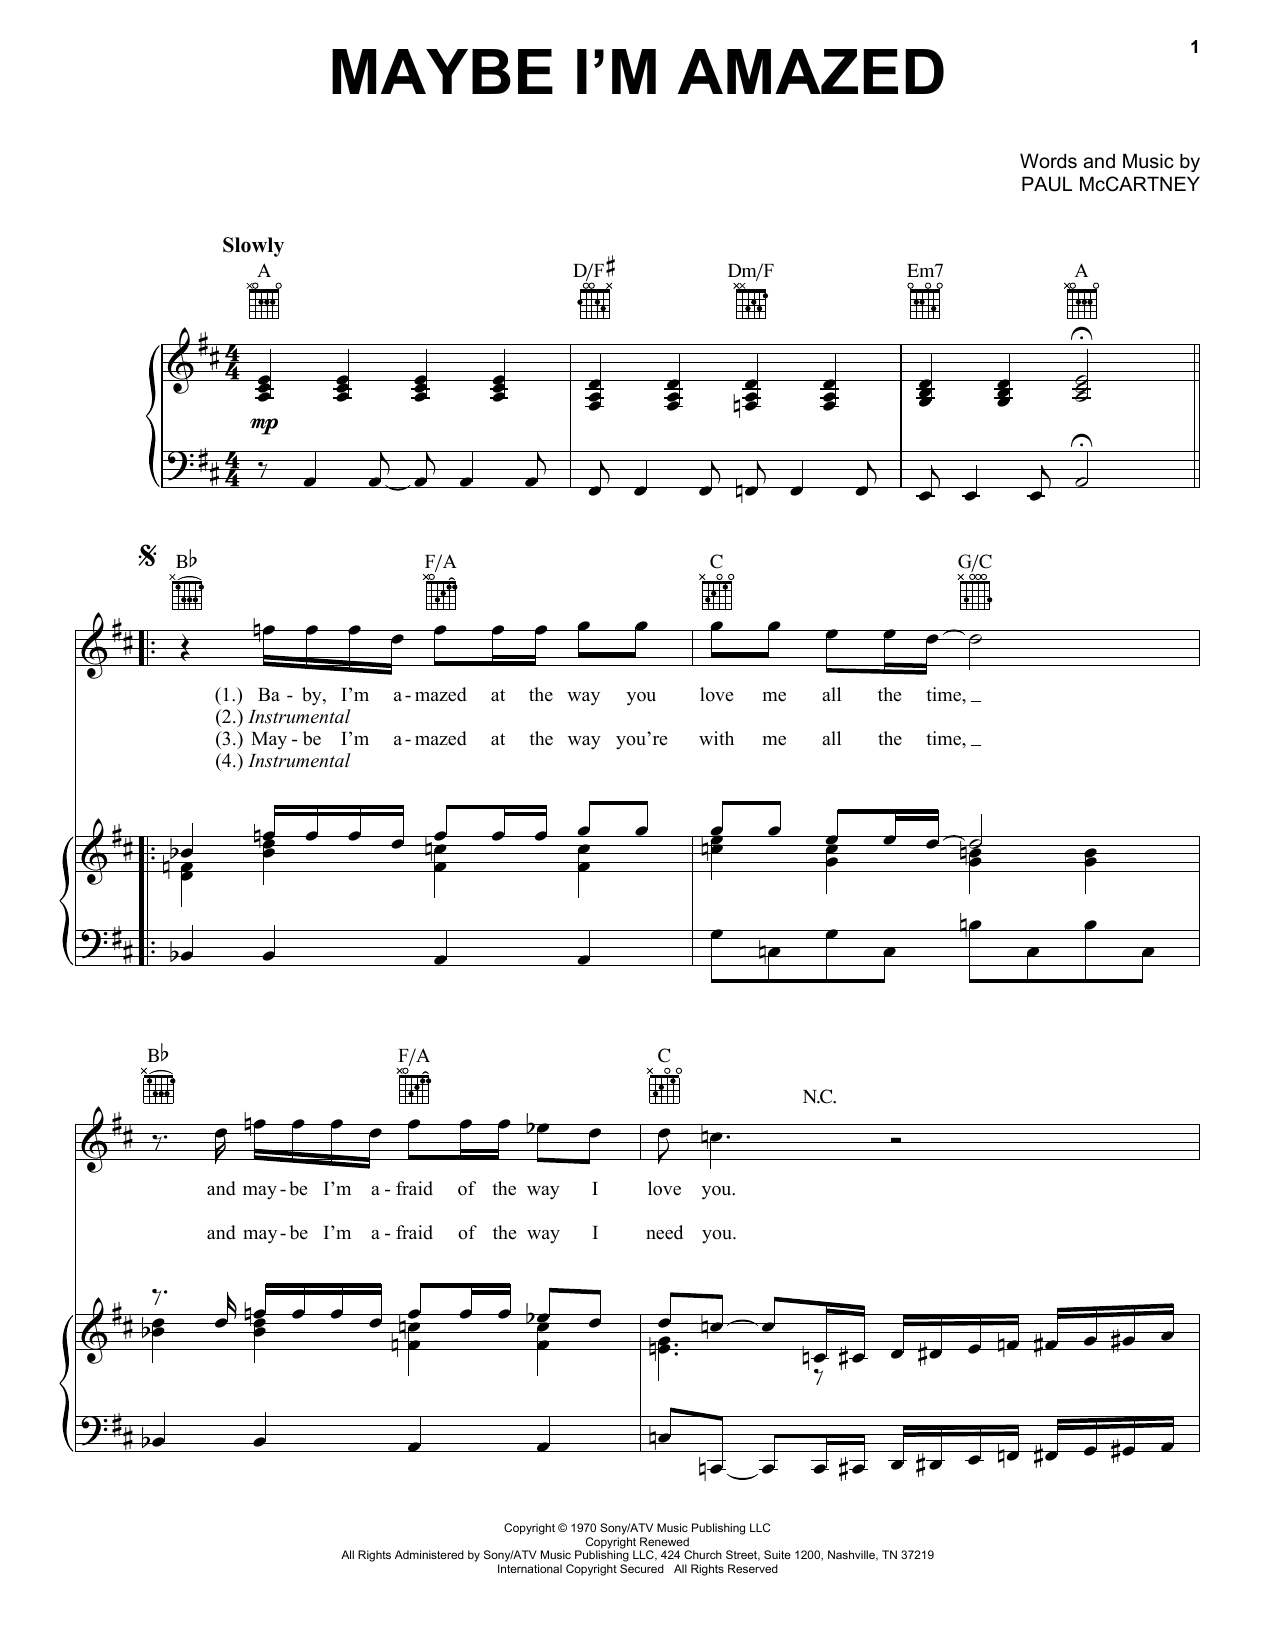 Download Paul McCartney Maybe I'm Amazed Sheet Music and learn how to play Baritone Ukulele PDF digital score in minutes